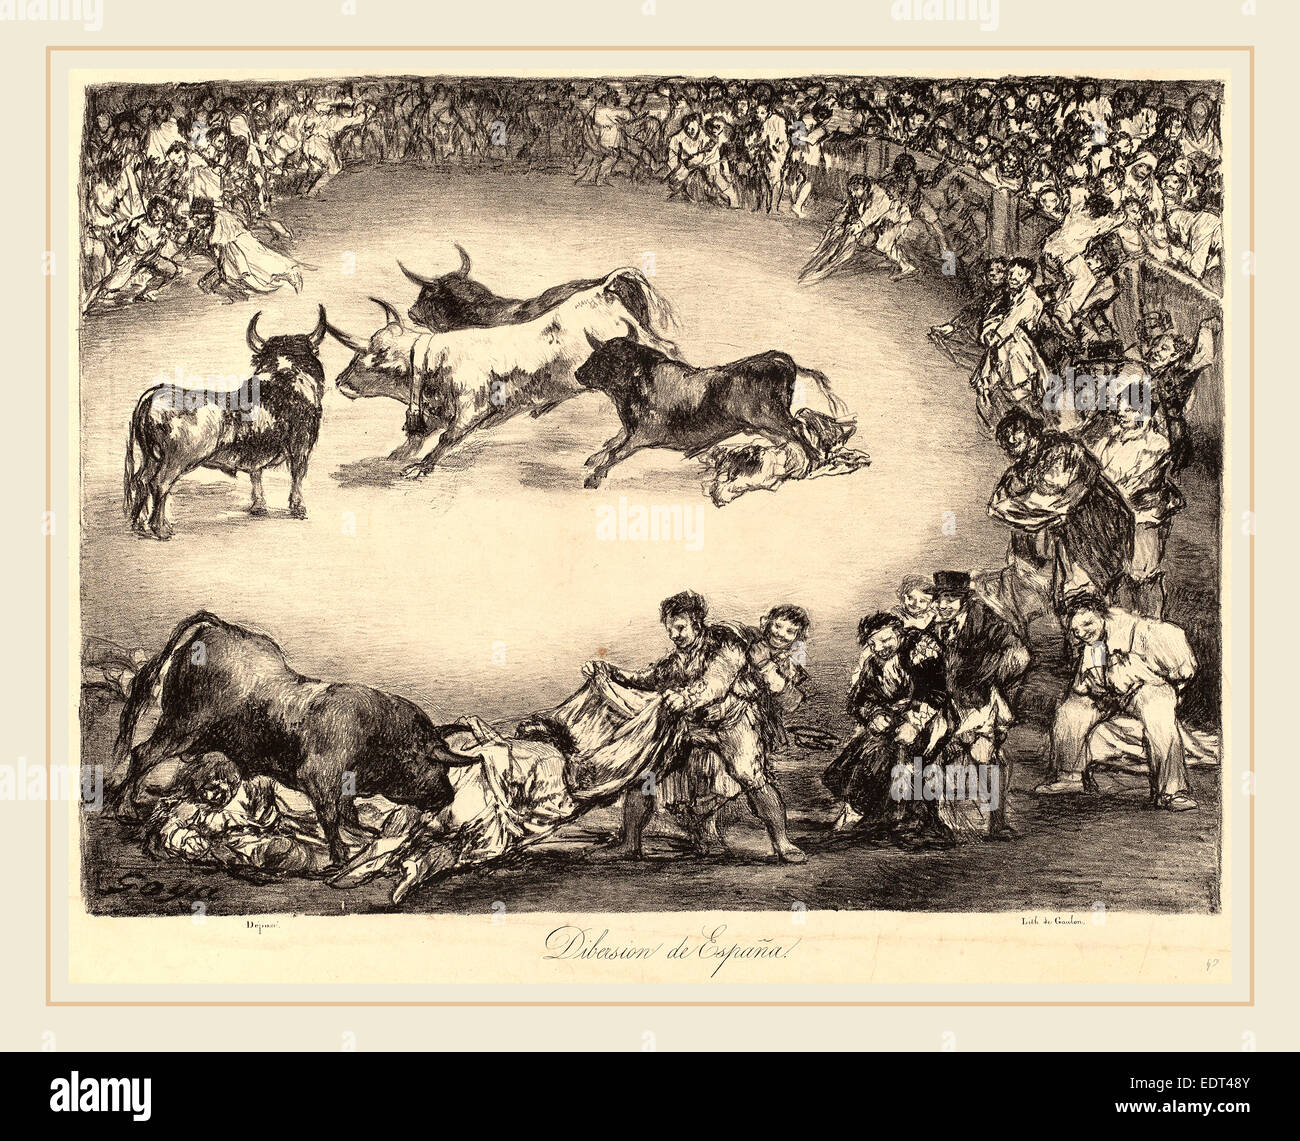 Francisco de Goya, Dibersion de España (Spanisch Entertainment), Spanisch, 1746-1828, 1825, Lithographie auf Papier Vélin Stockfoto